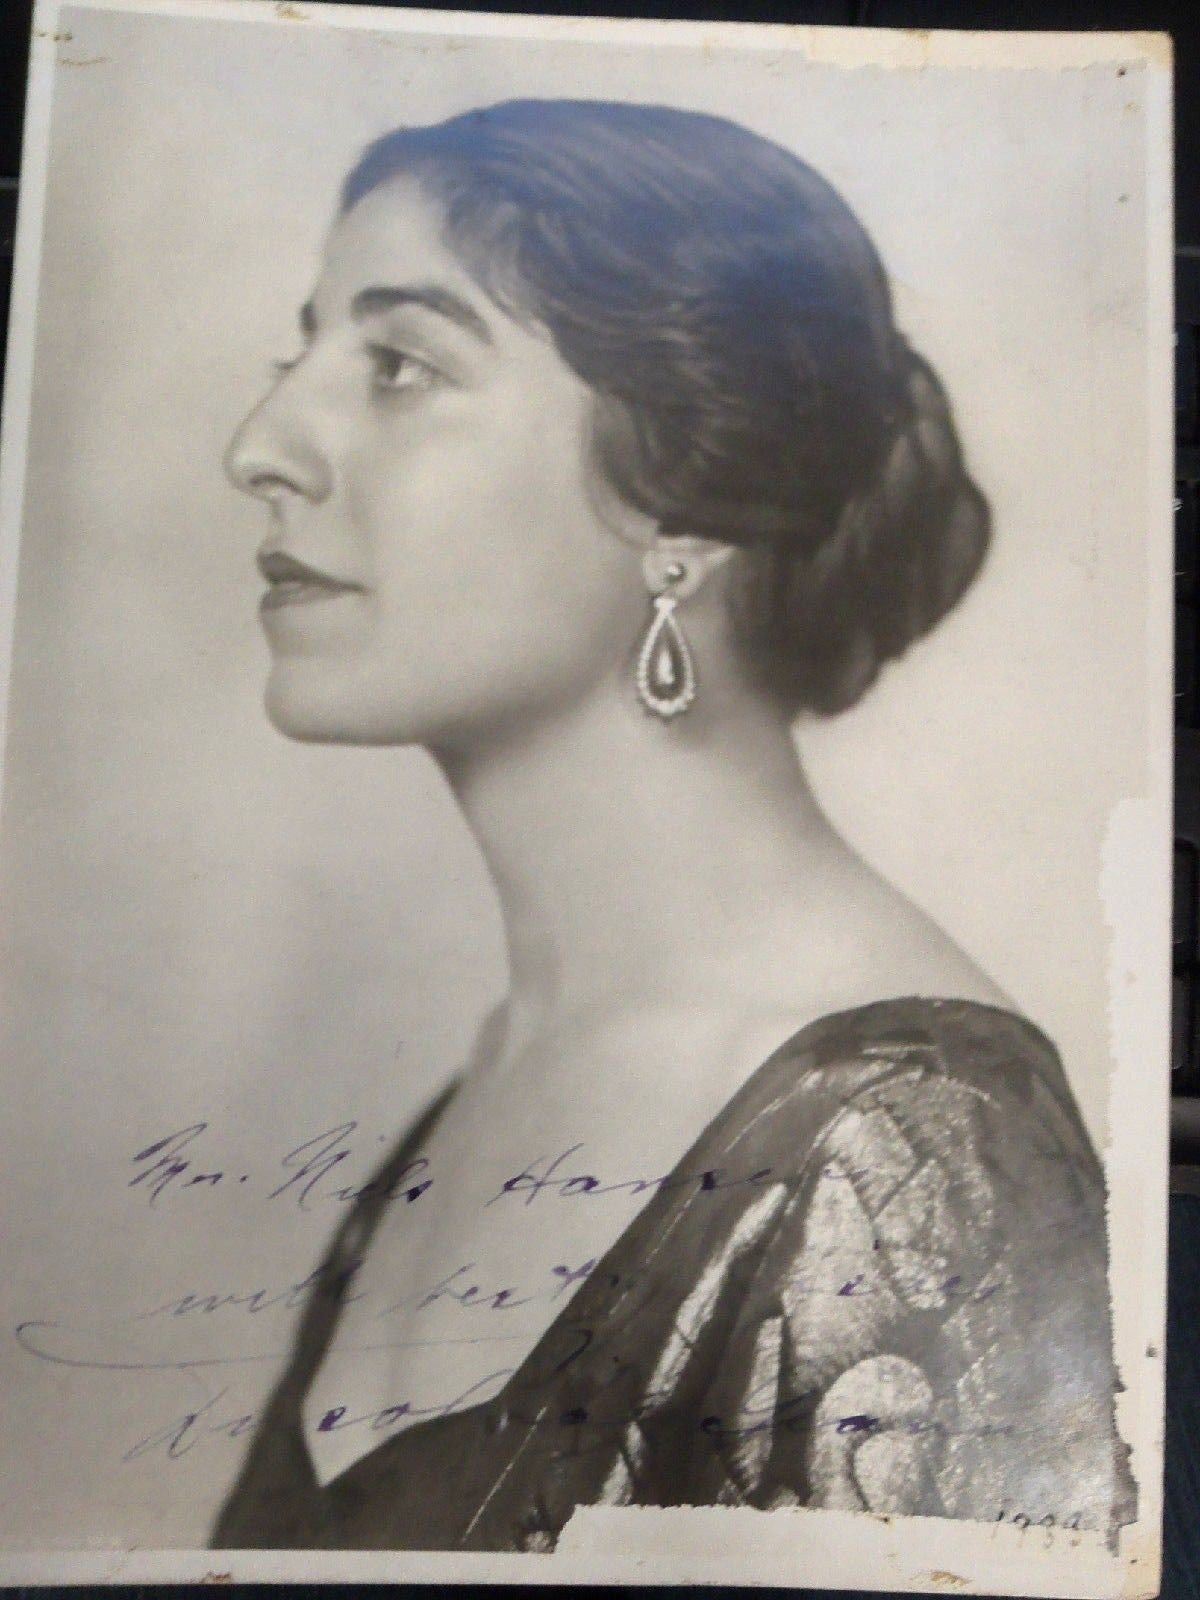 Dusolina Giannini (1902-12-19 – 1986-06-29). Operatic sopranos